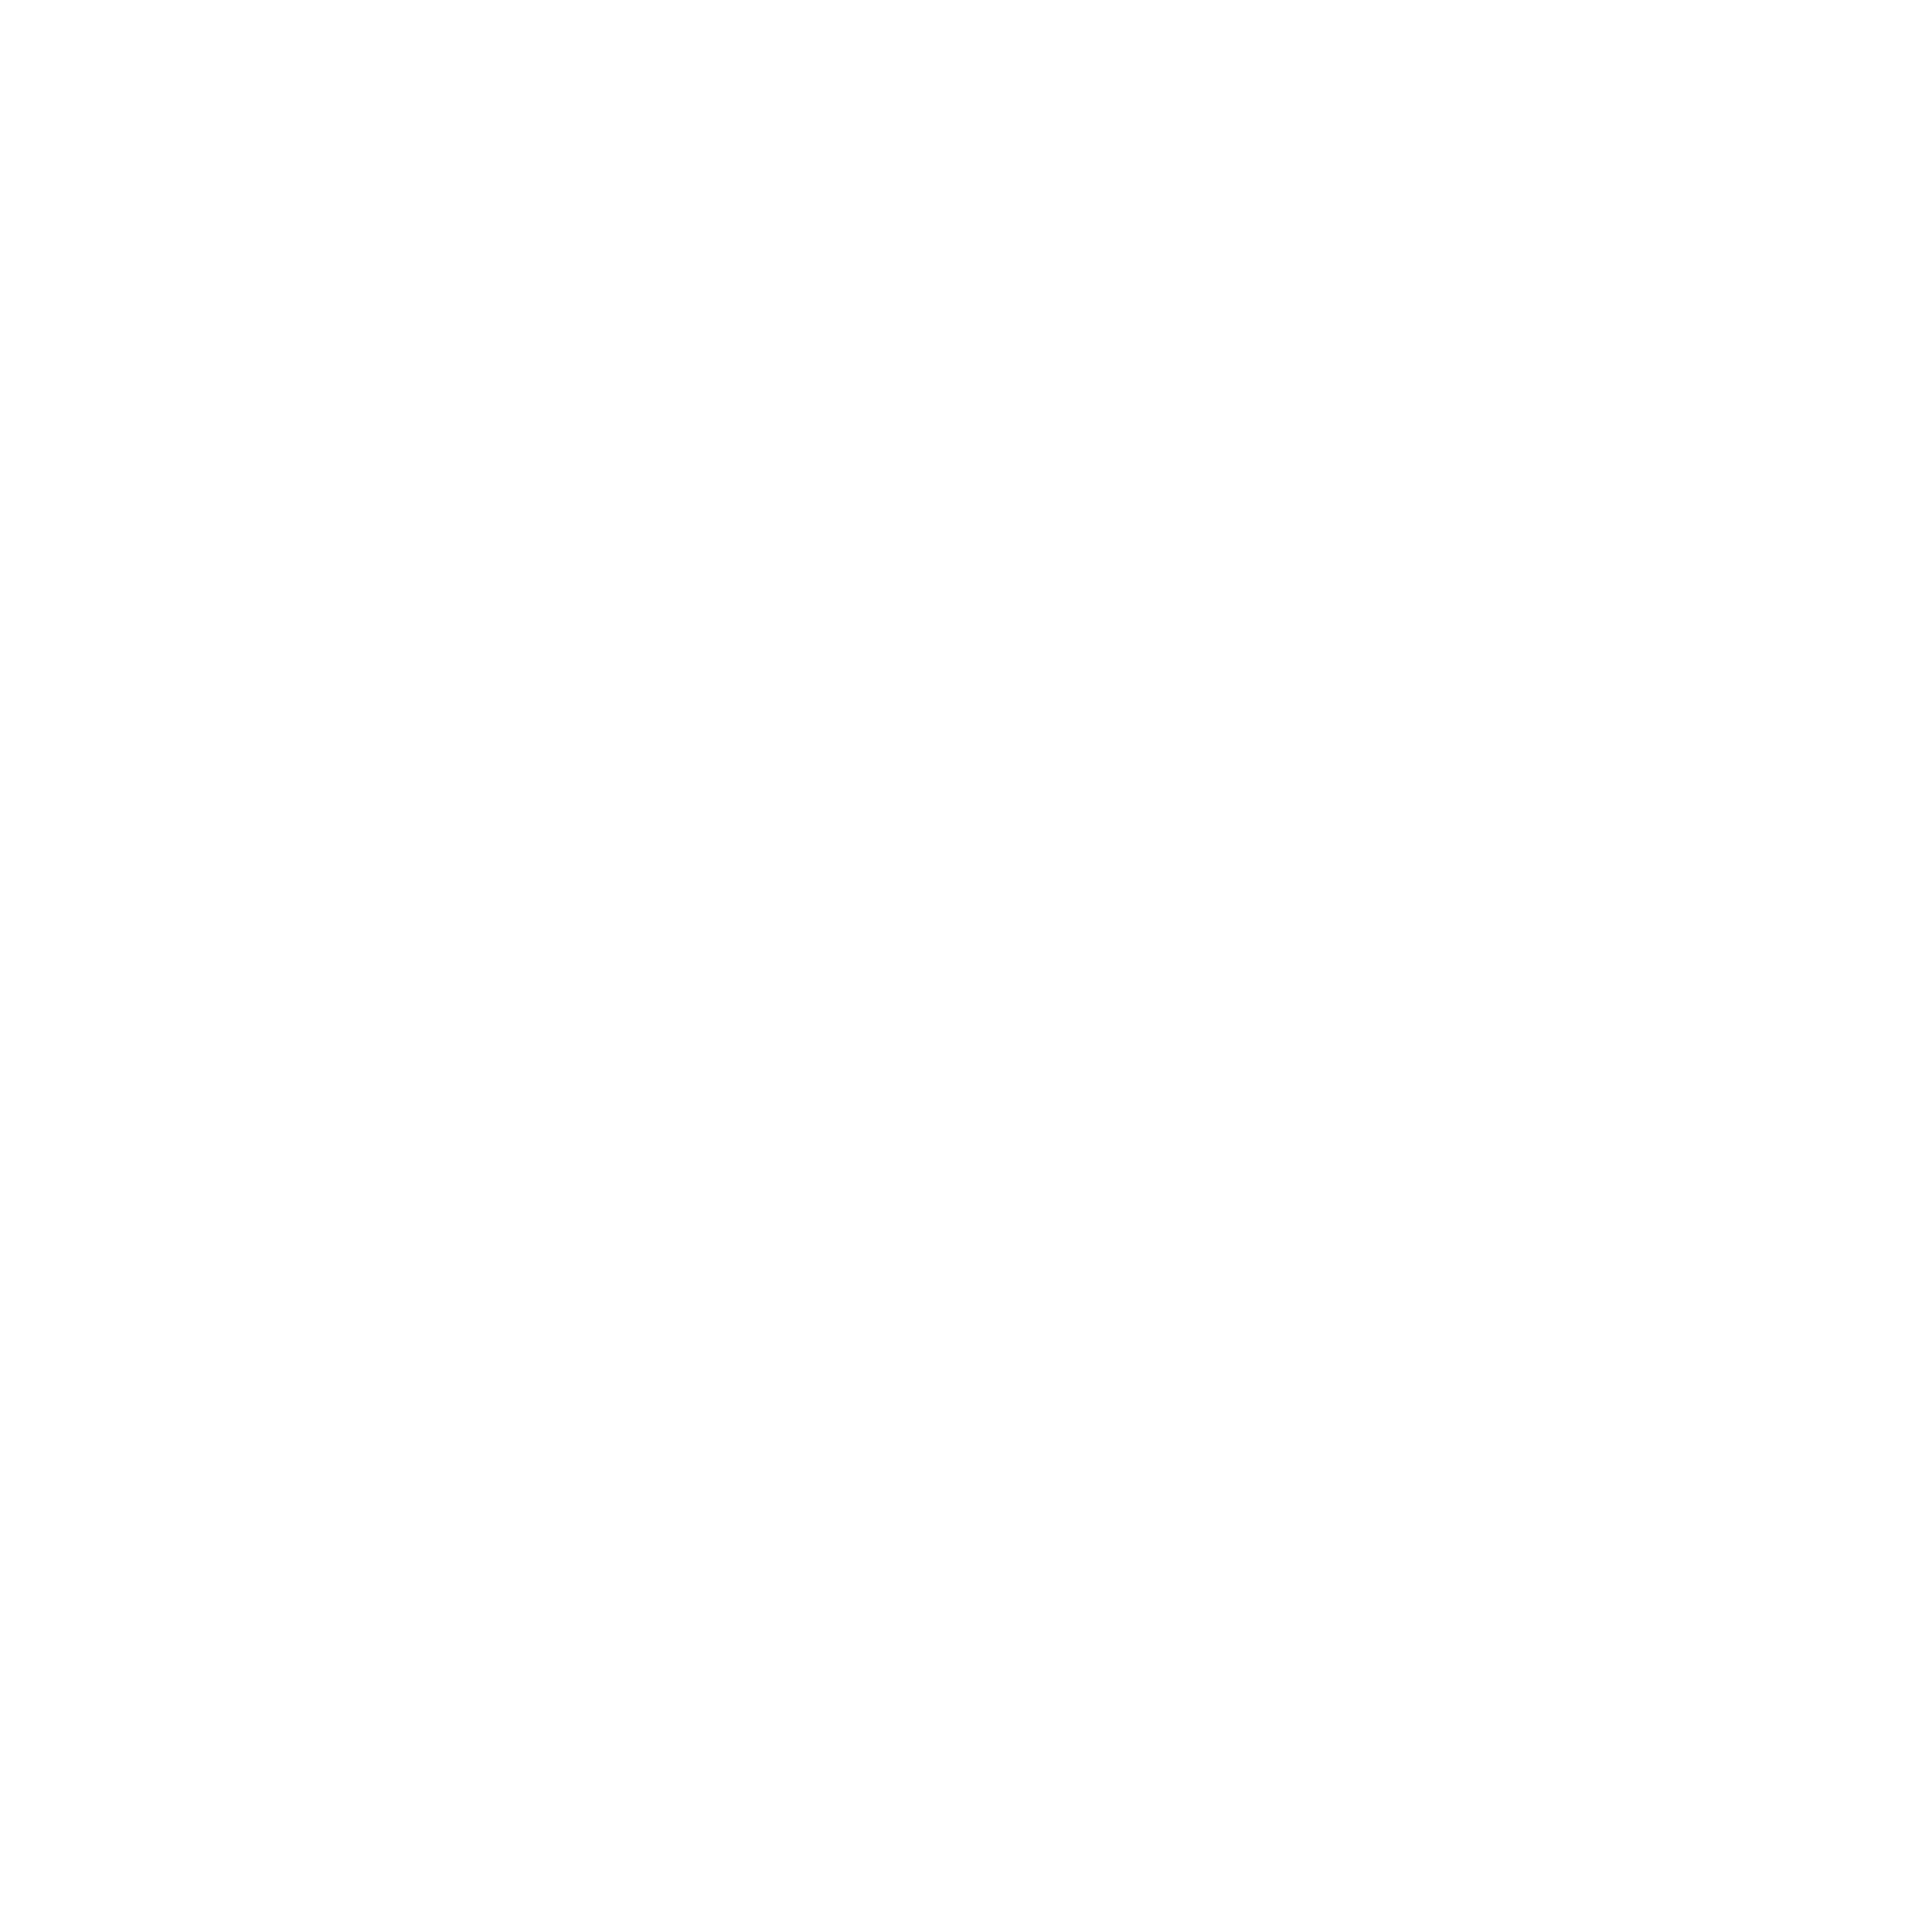 LA Times Crossword: May 22, 2022, Crosswords